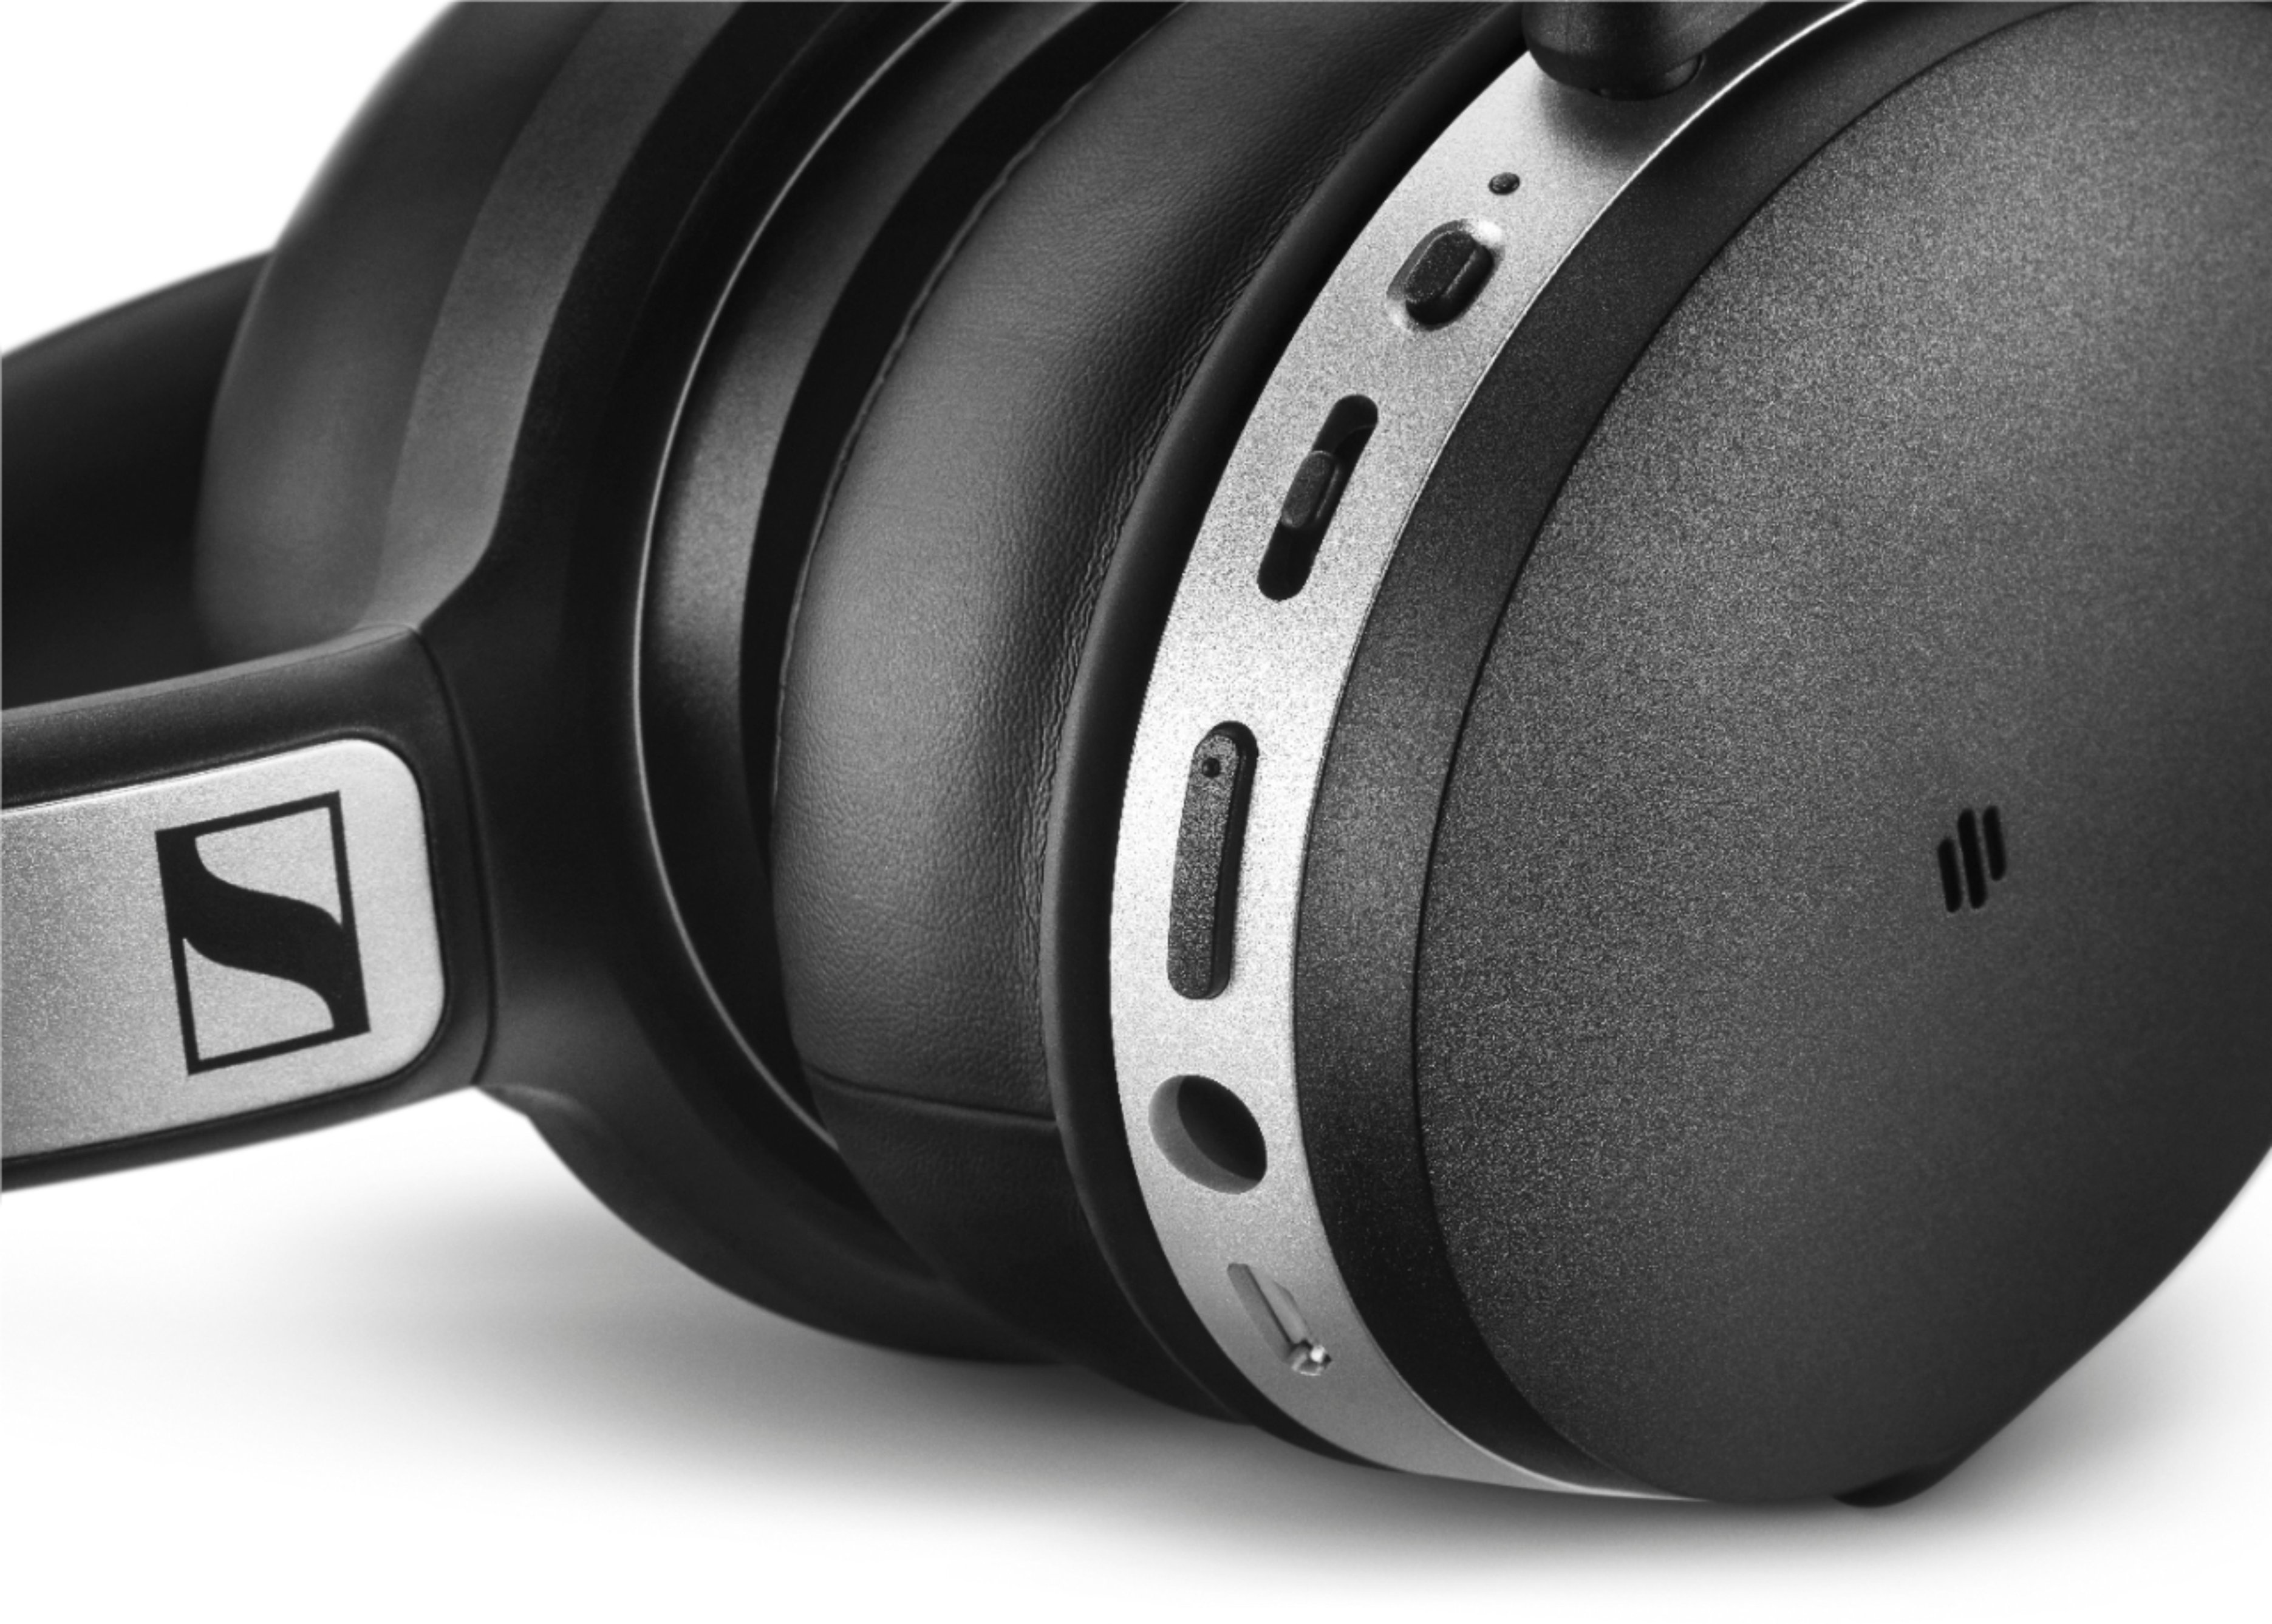 Sennheiser HD 4.50 Special Edition Auriculares inalámbricos Bluetooth con  cancelación de ruido activa